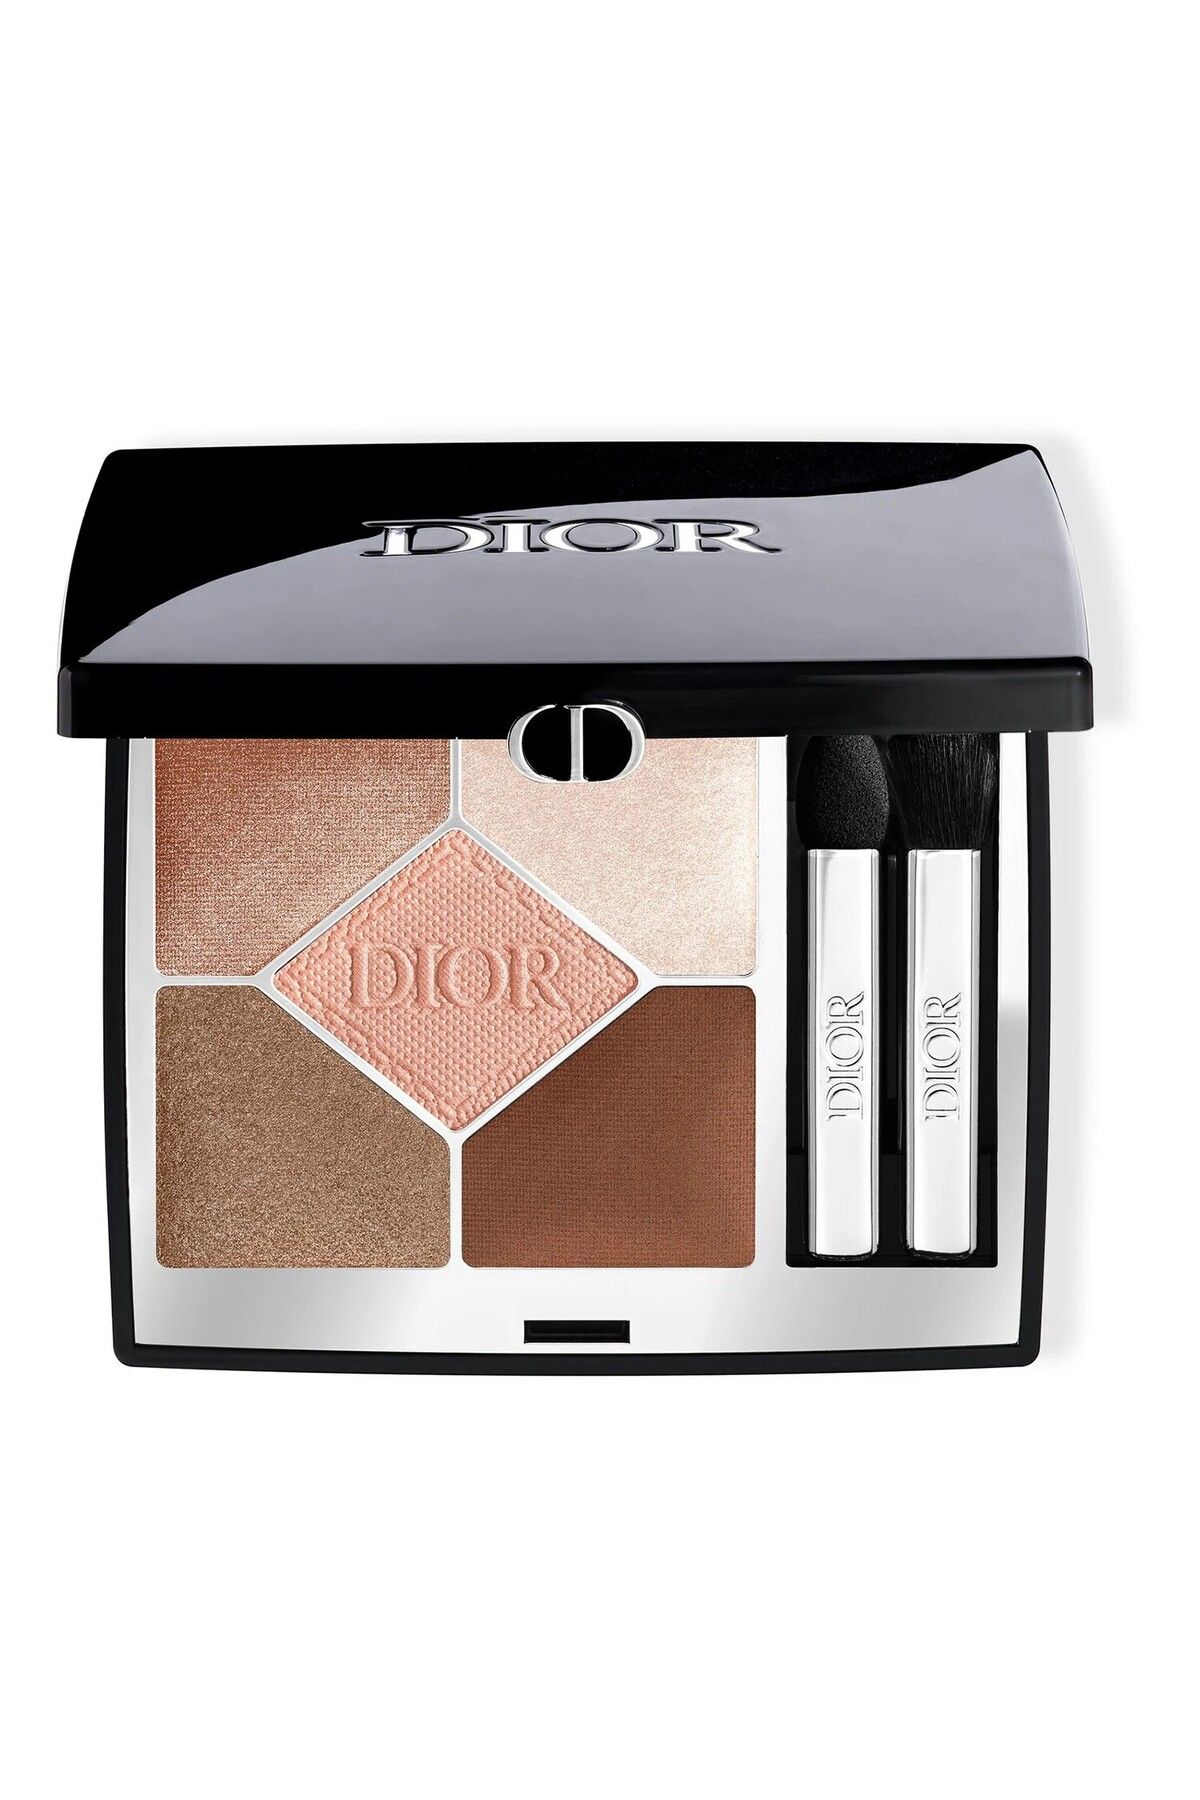 Dior 5 Couleurs Couture Eyeshadow Palette - Göz Farı Paleti